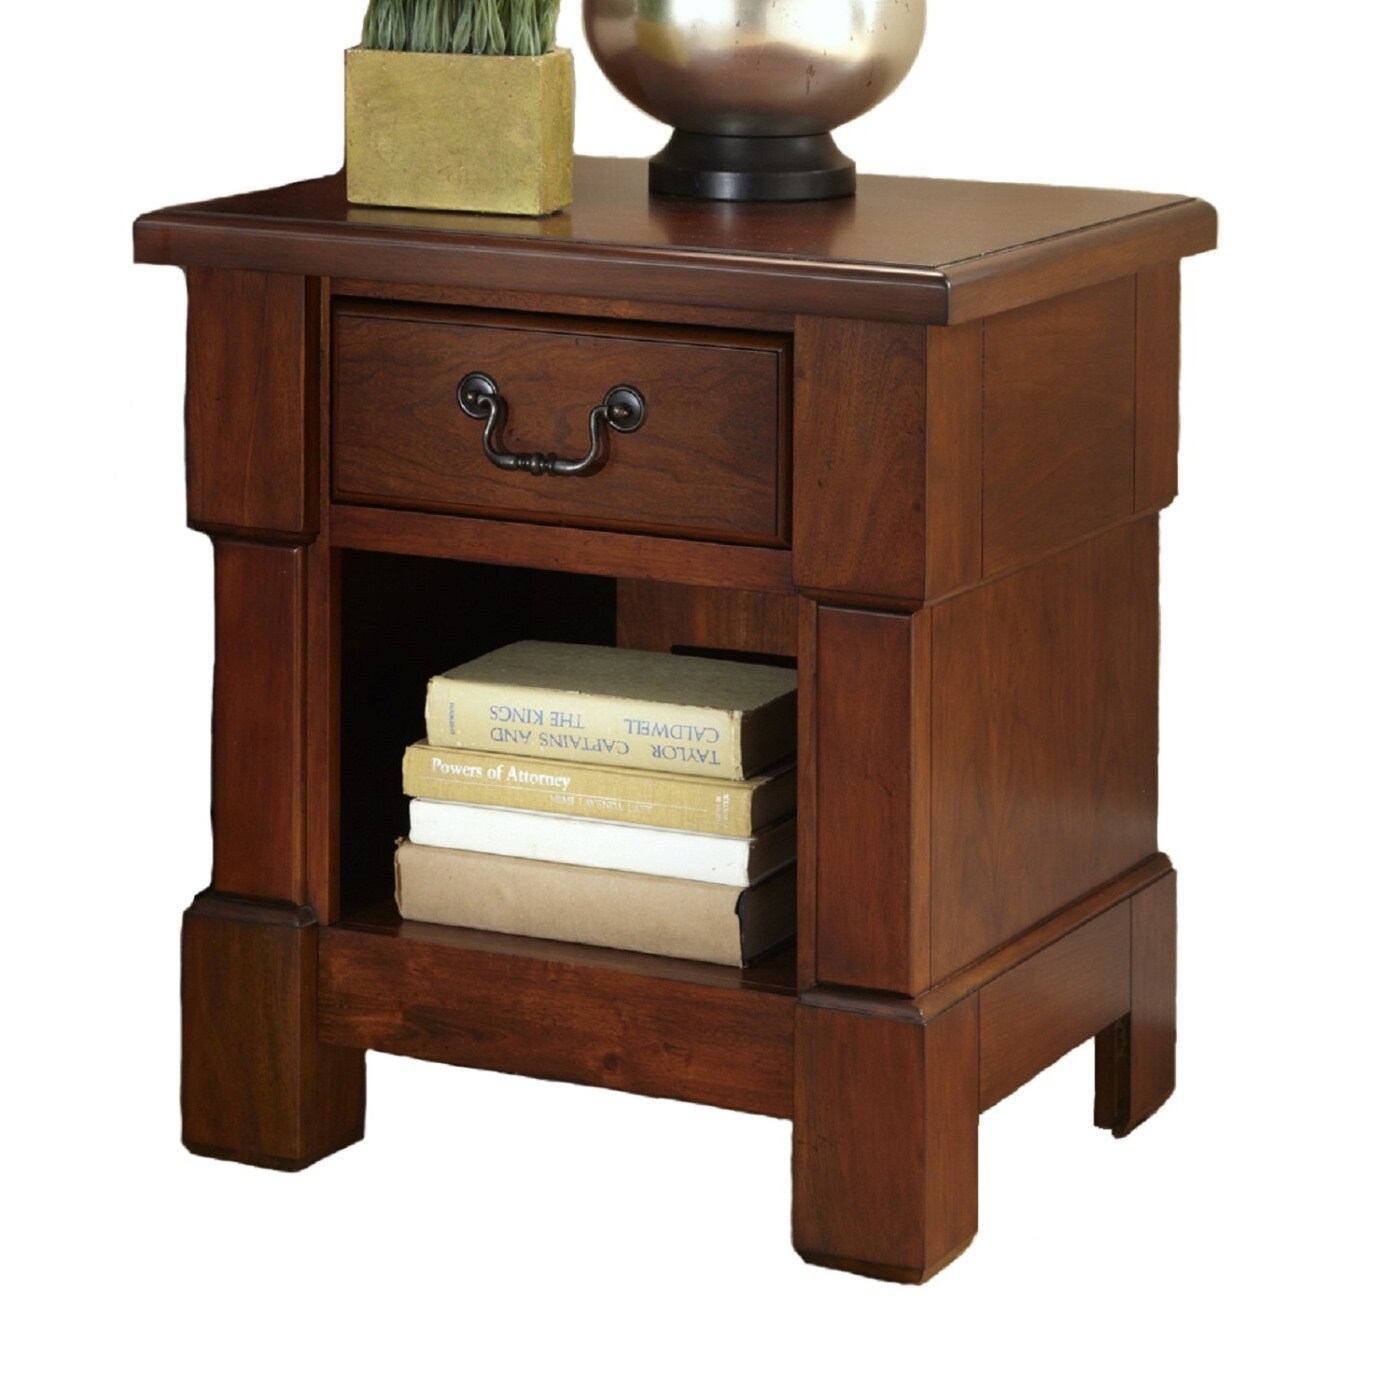 Floating Nightstand Organizer Bedside With Drawer Table Modern Small/side/ end/bed Table/storage Wood/wooden Chestnut Shelf/dresser/furniture 